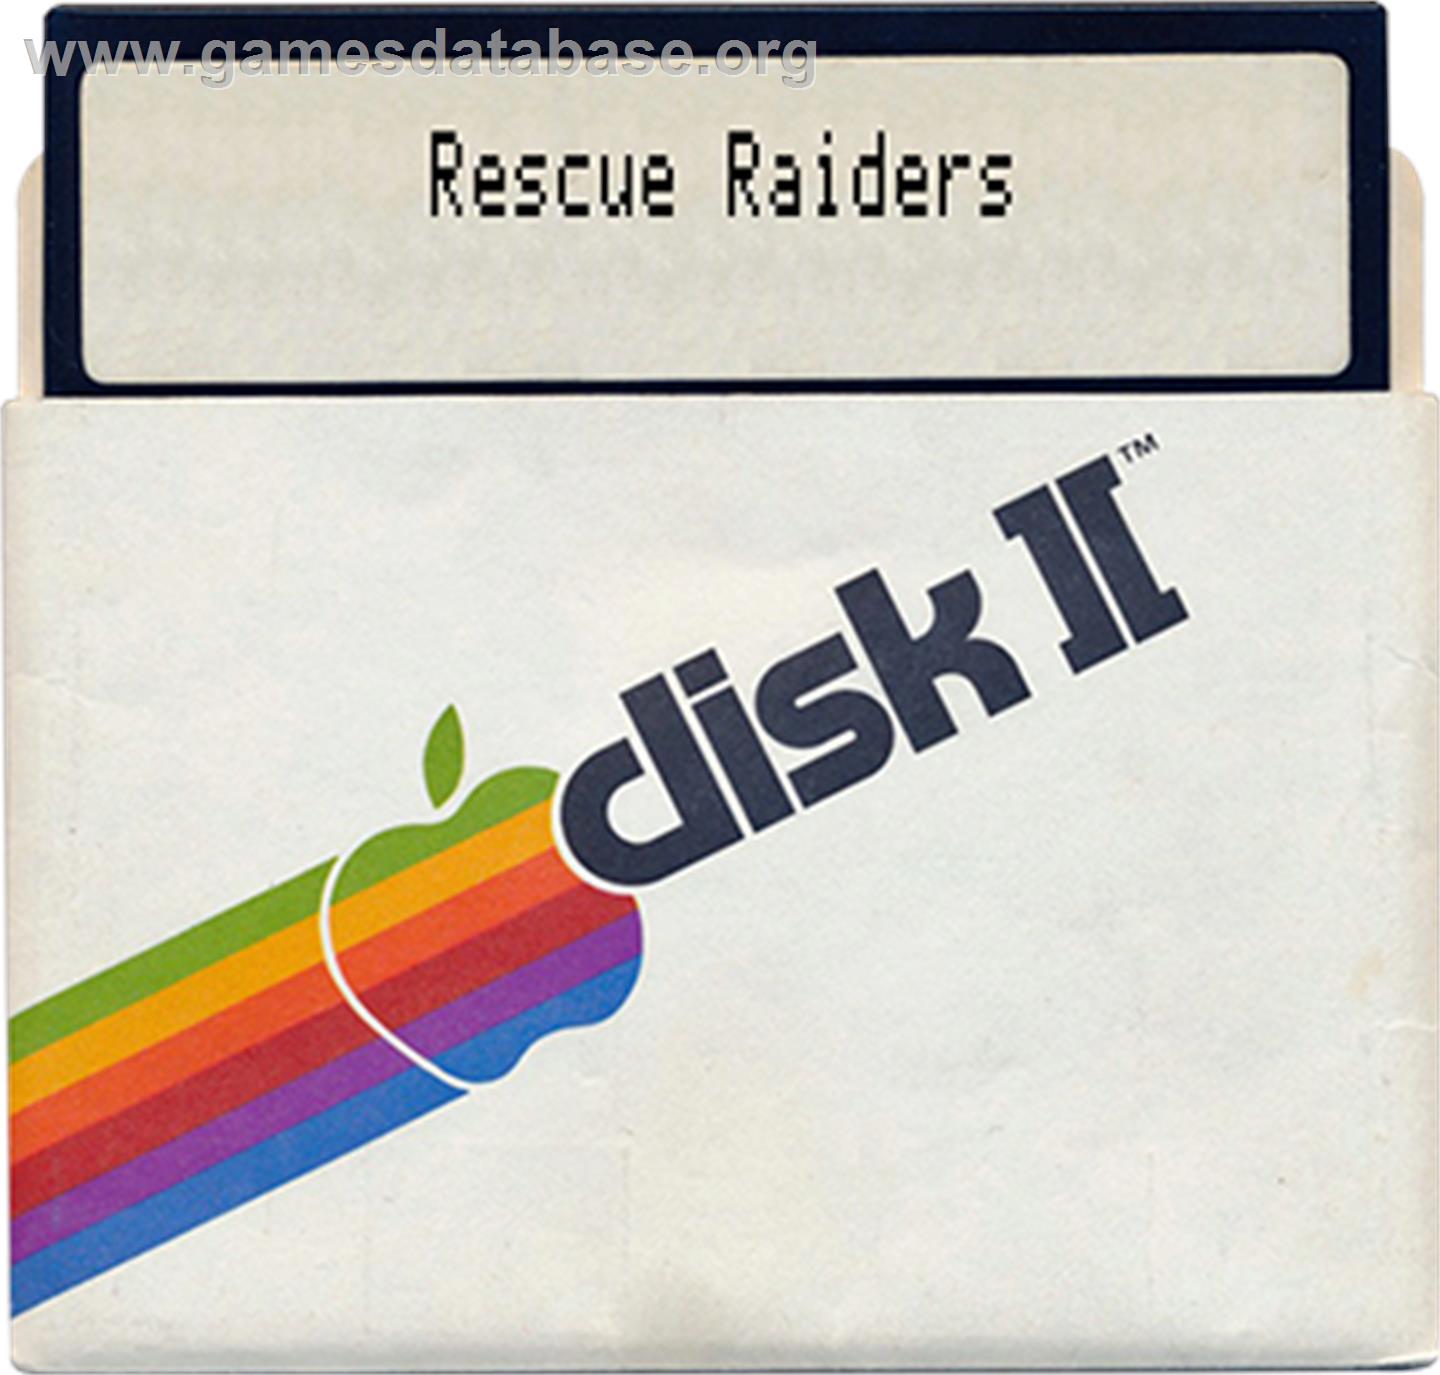 Rescue Raiders - Apple II - Artwork - Disc